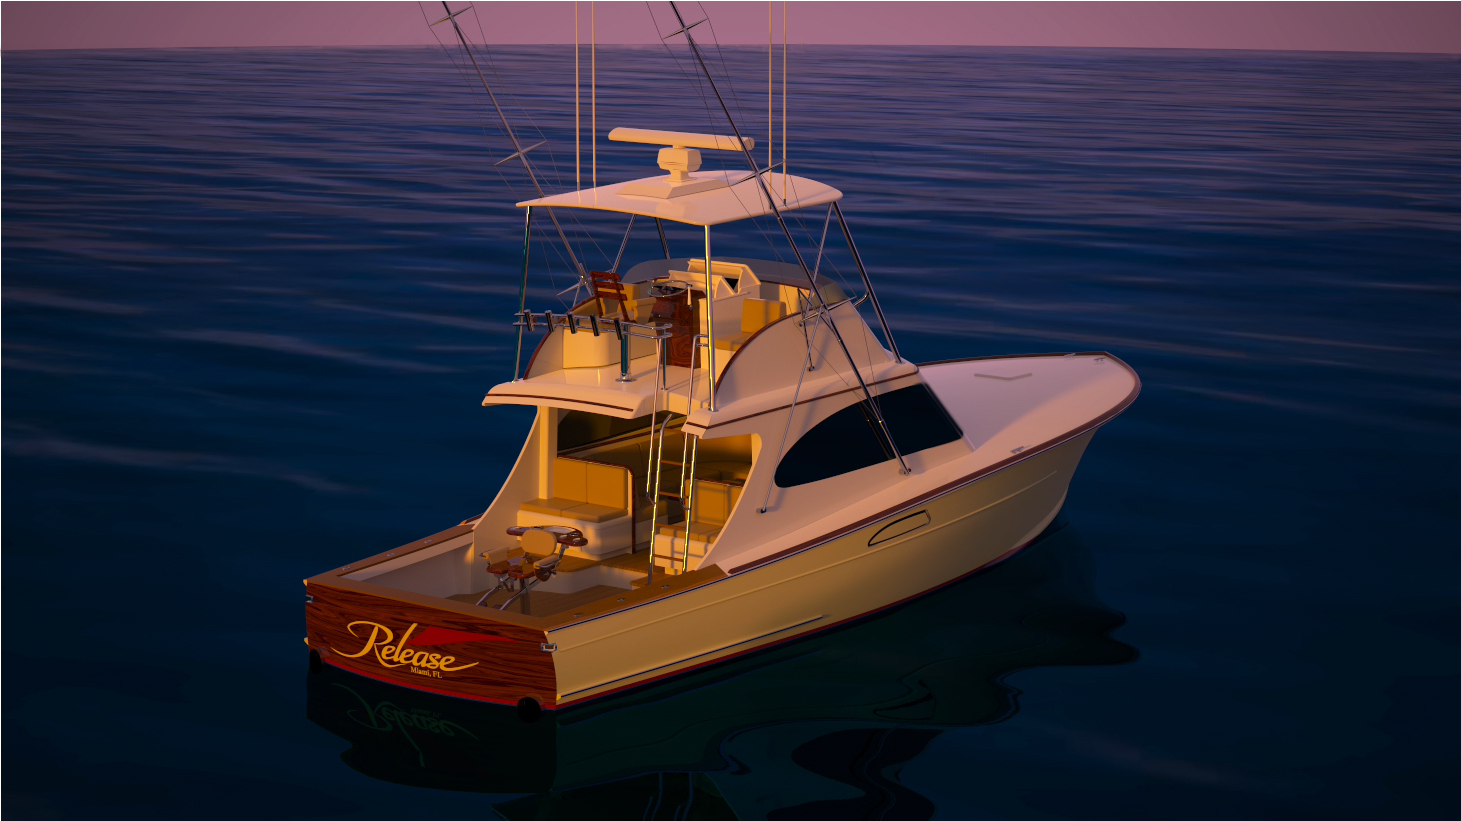 43 day boat | Release Boatworks - Custom Sport Fishing Boats